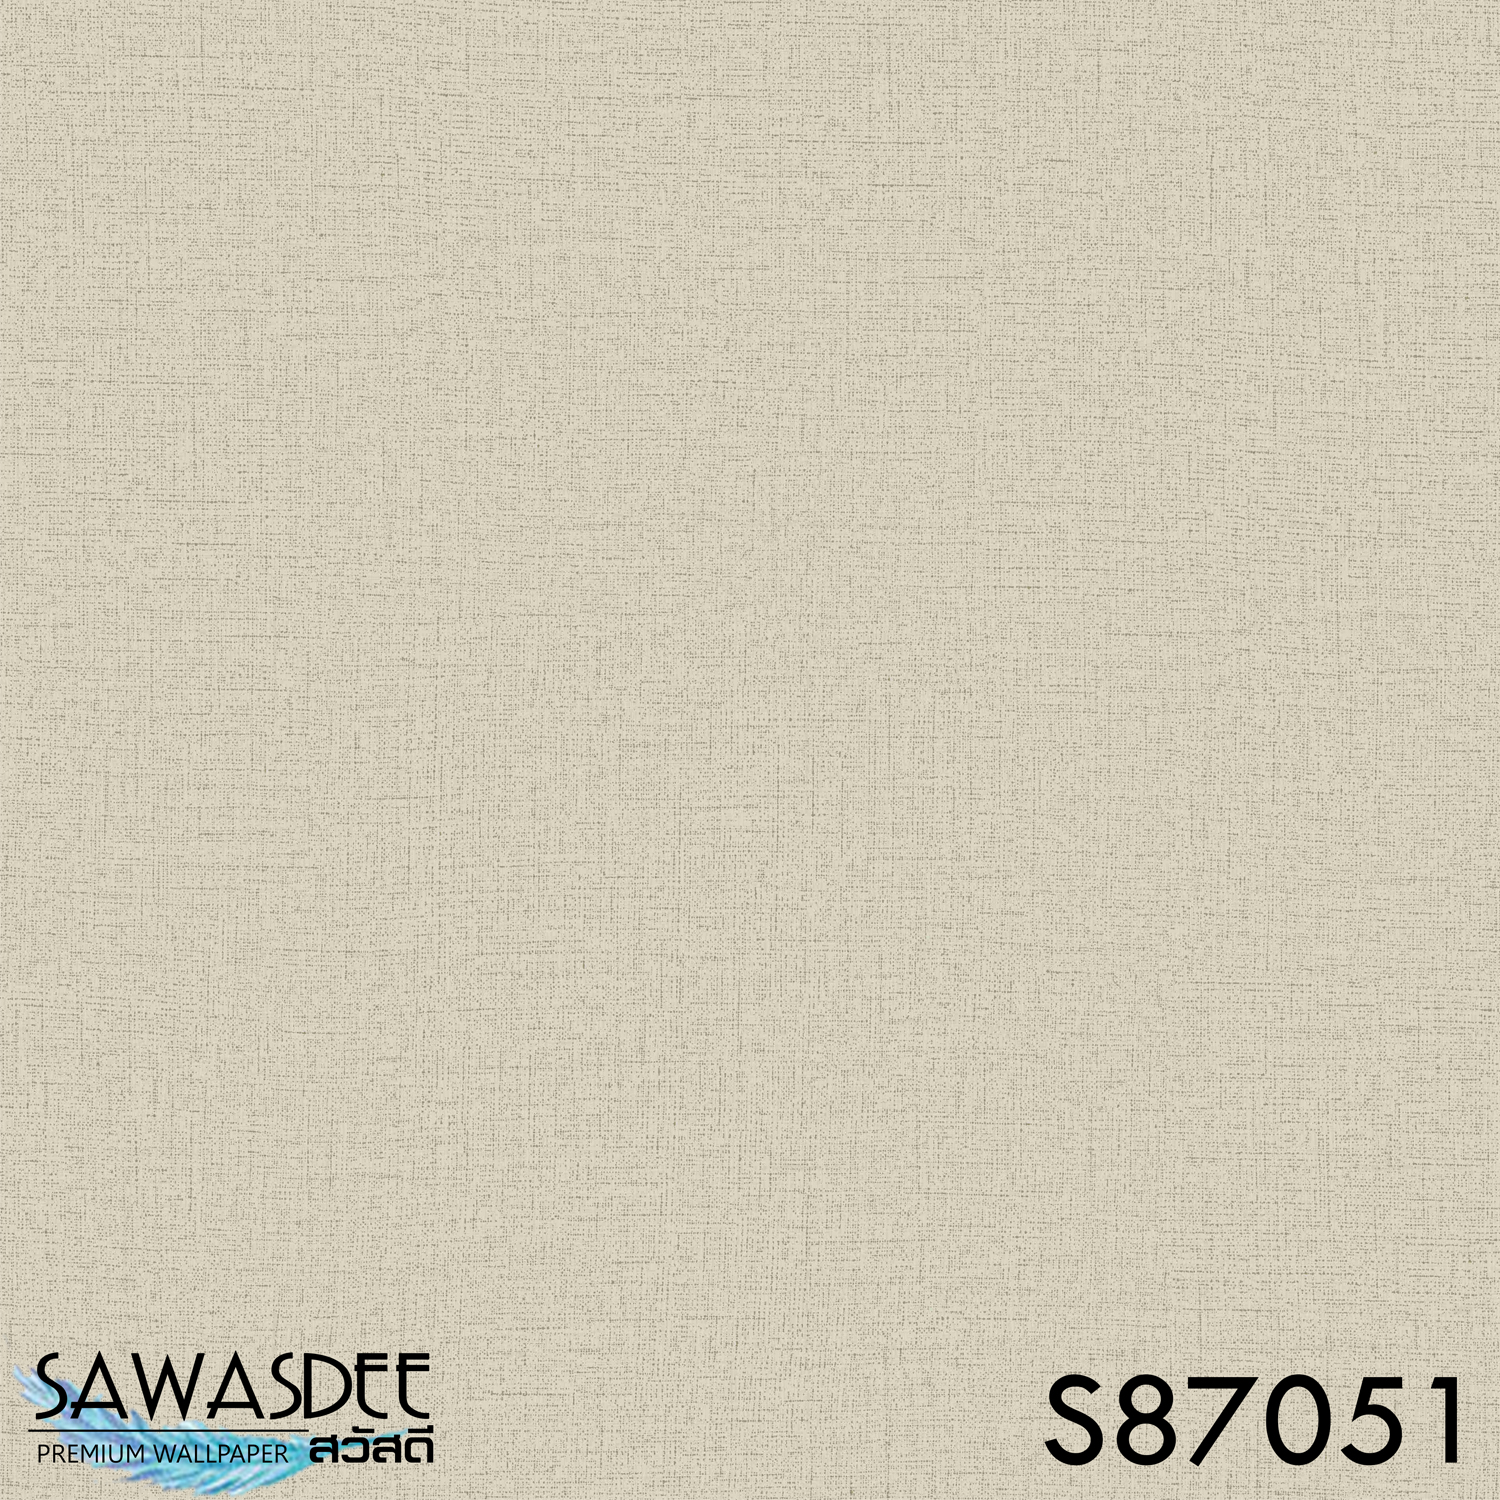 Wallpaper (SAWASDEE) S87051